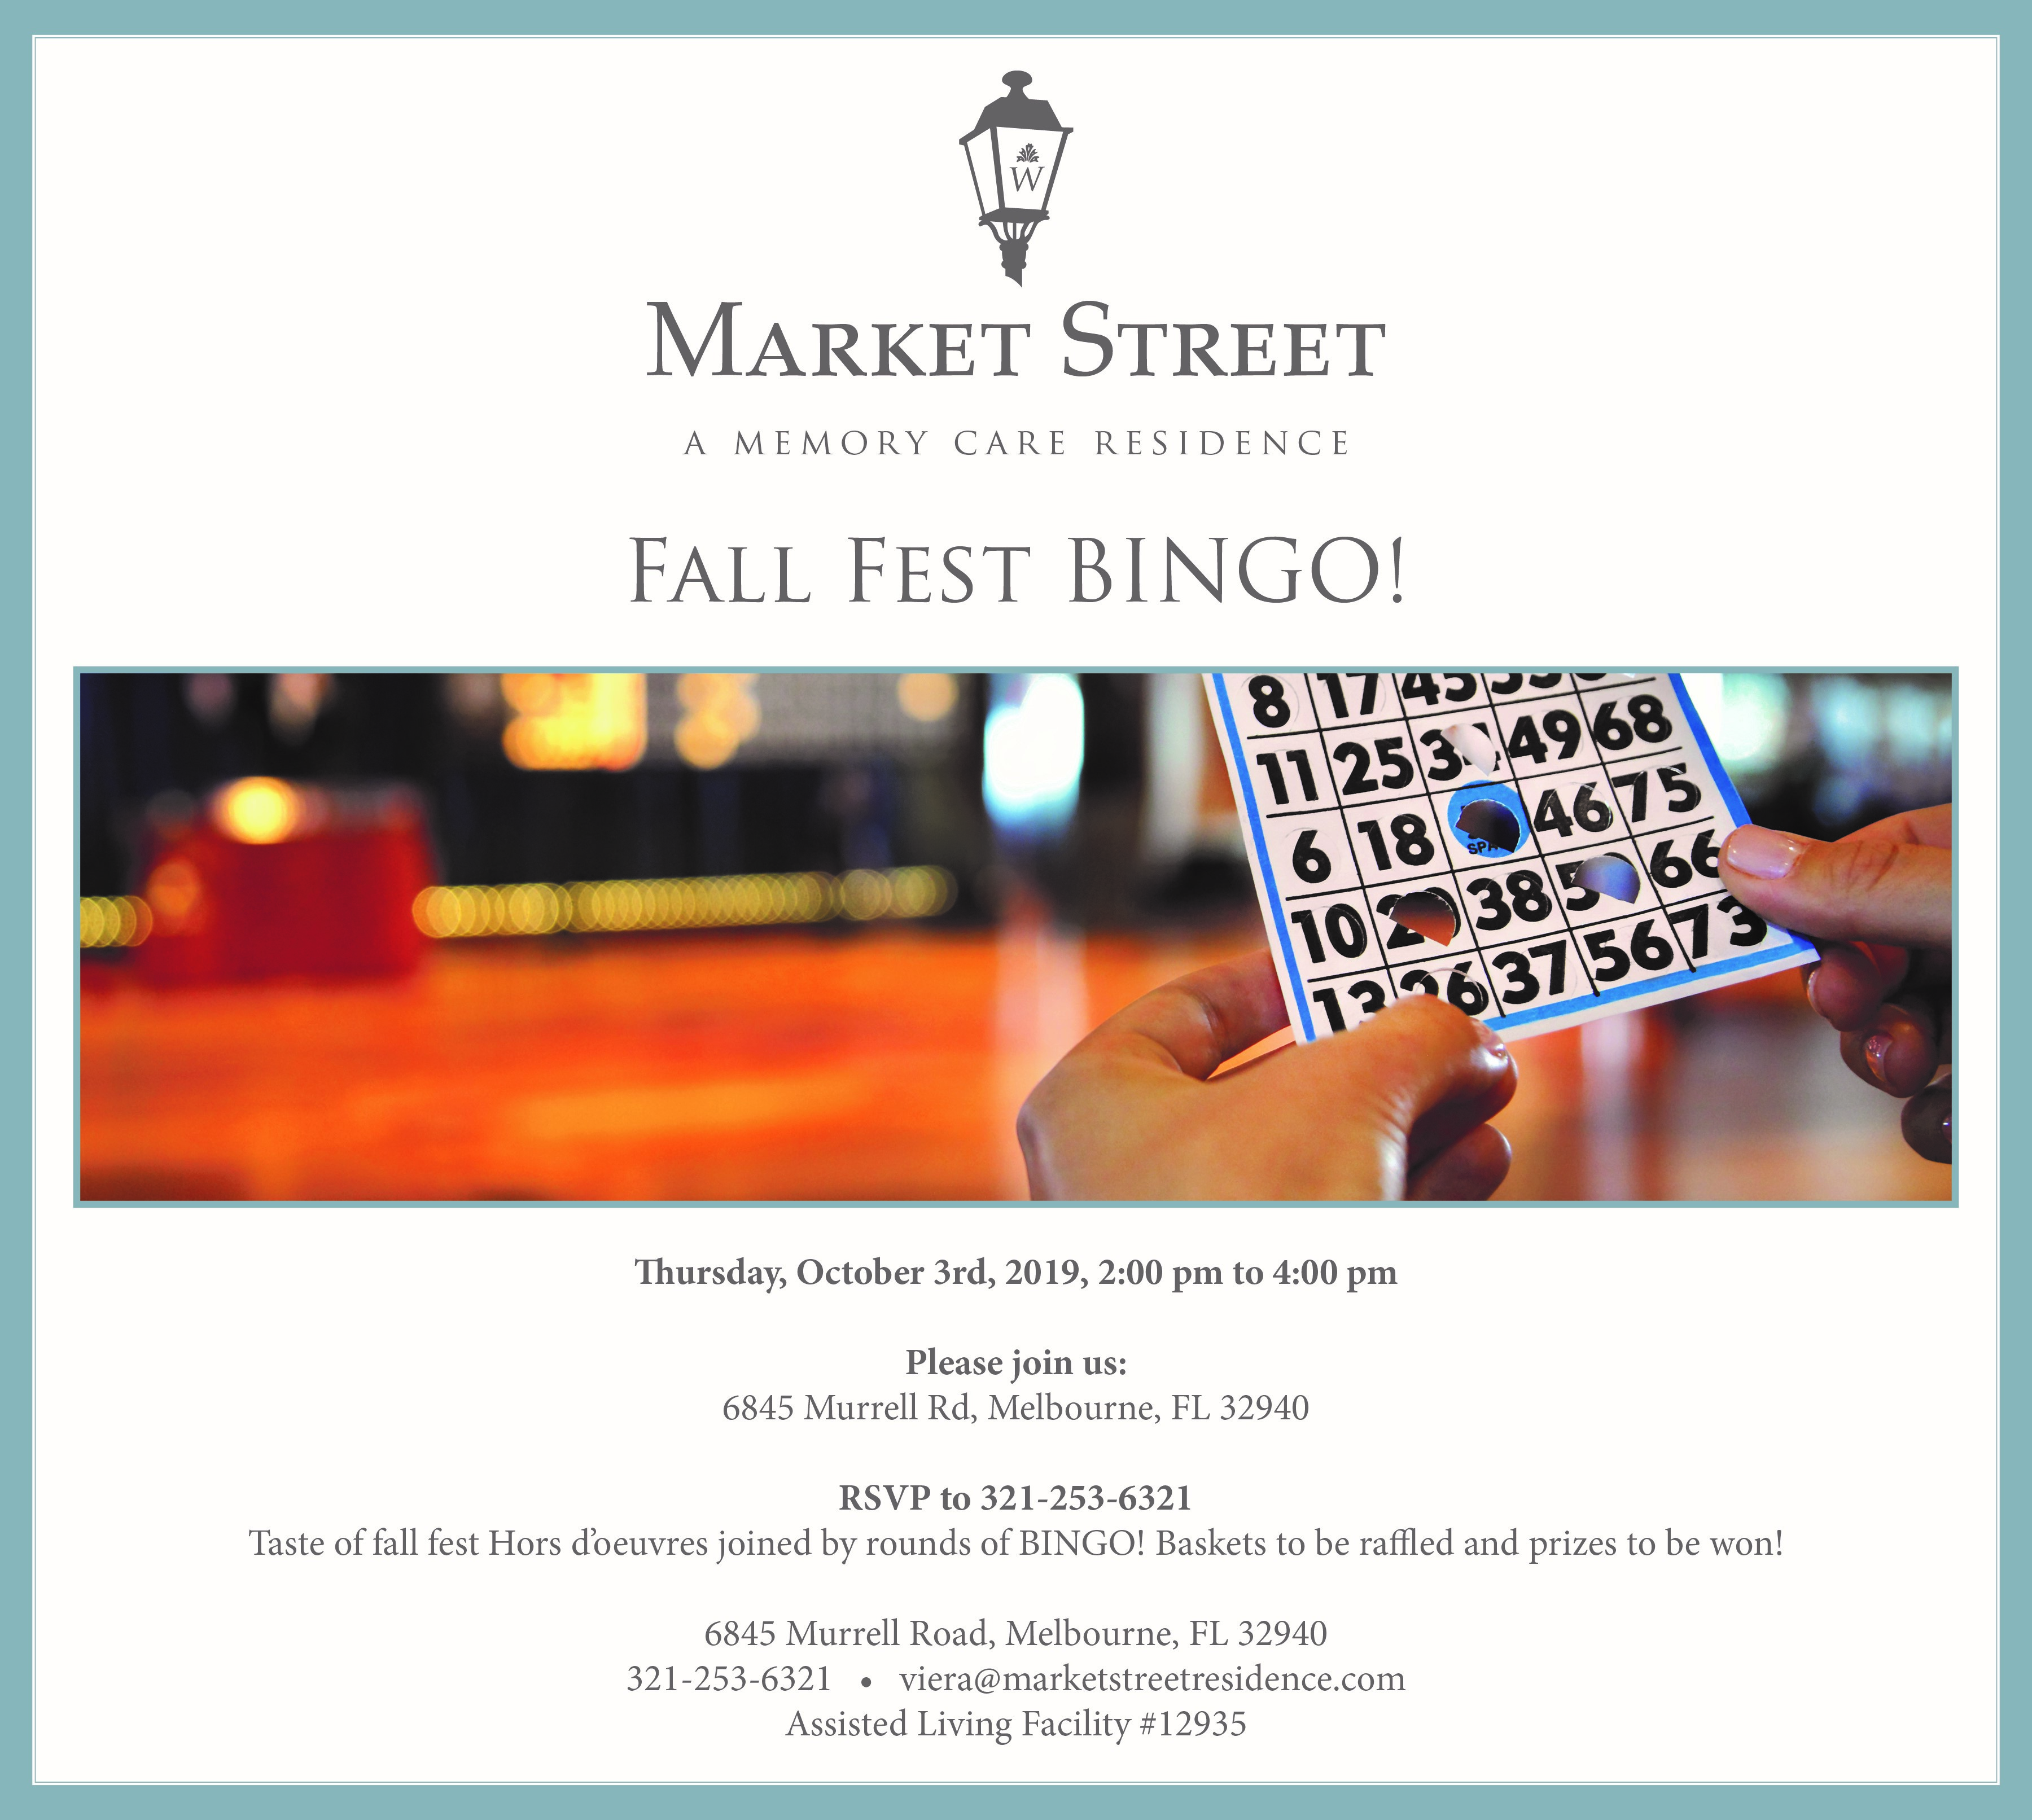 Fall Fest BINGO! at Market Street